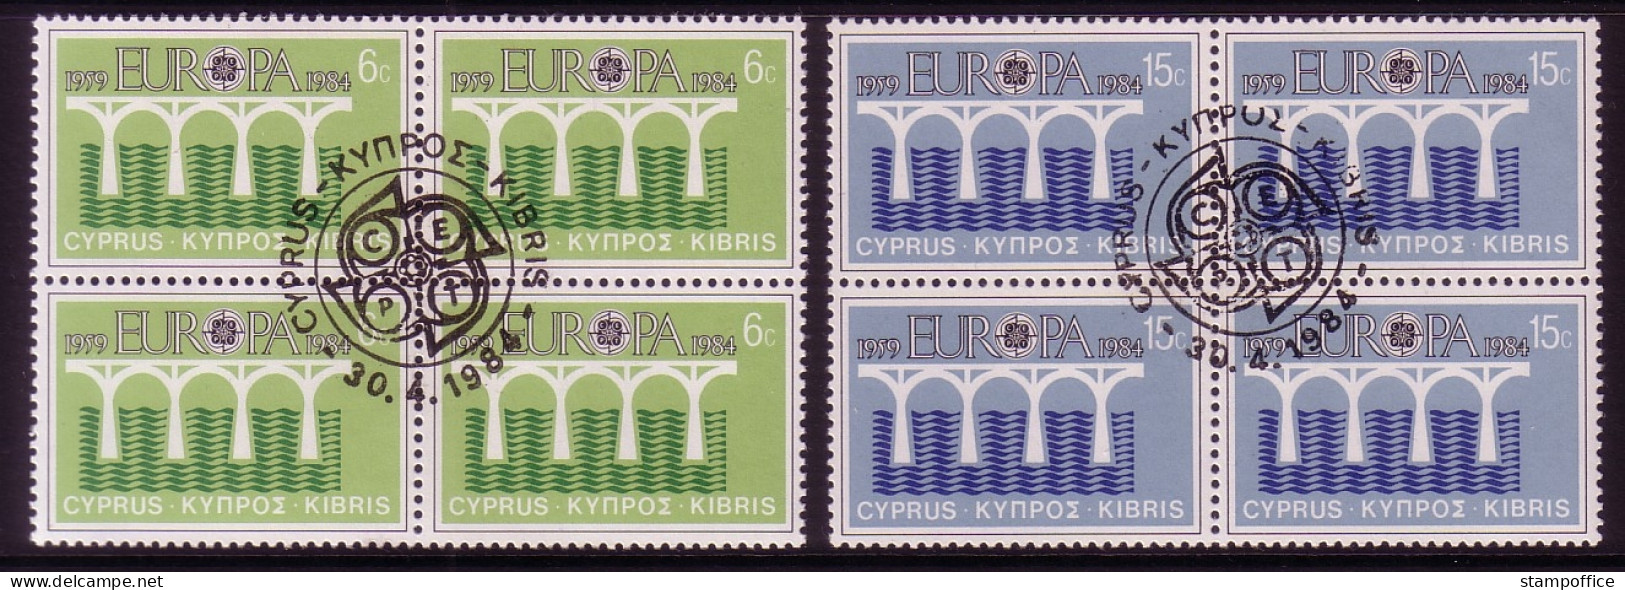 ZYPERN MI-NR. 611-612 GESTEMPELT(USED) 4er BLOCK EUROPA 1984 BRÜCKE - 1984